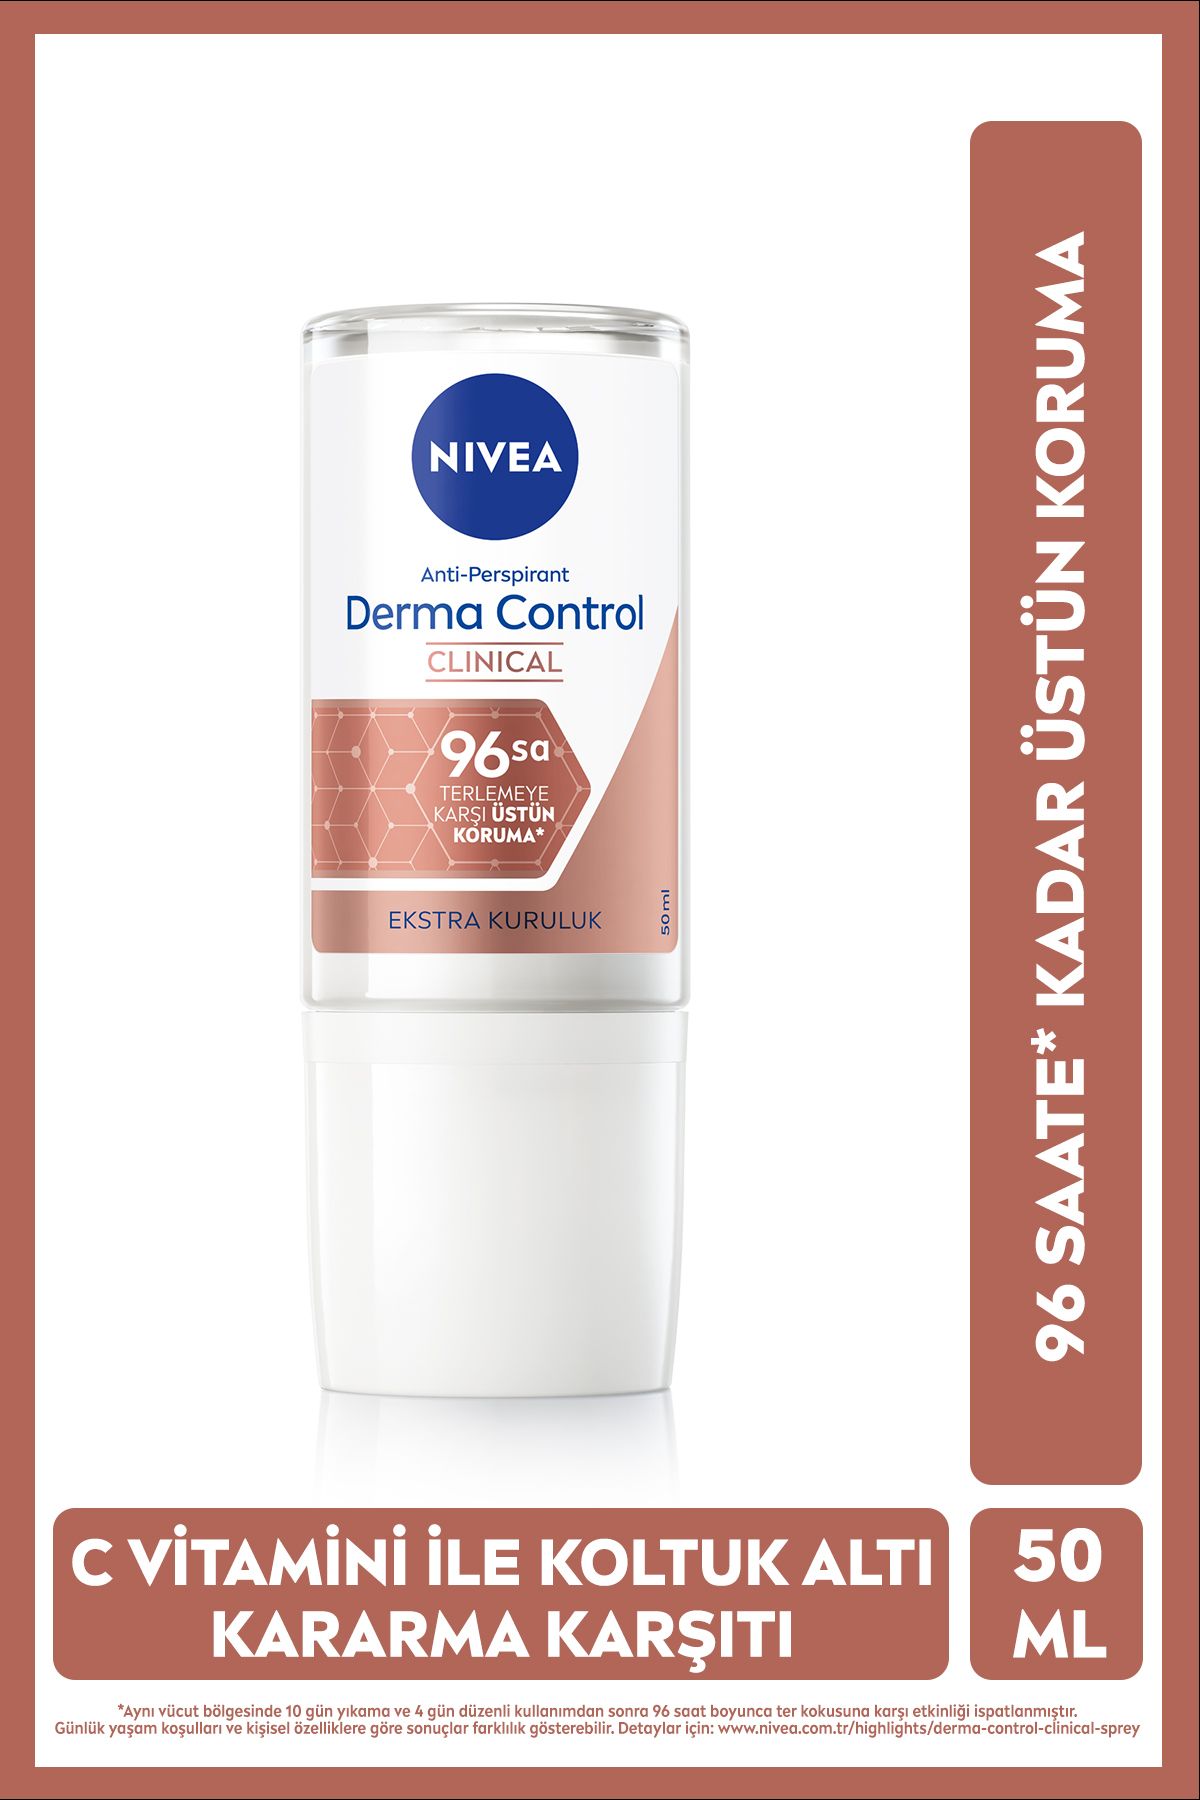 NIVEA Kadın Roll-on Deodorant Derma Control Clinical 50ml, C Vitamini İle Koltuk Altı Kararma Karşıtı